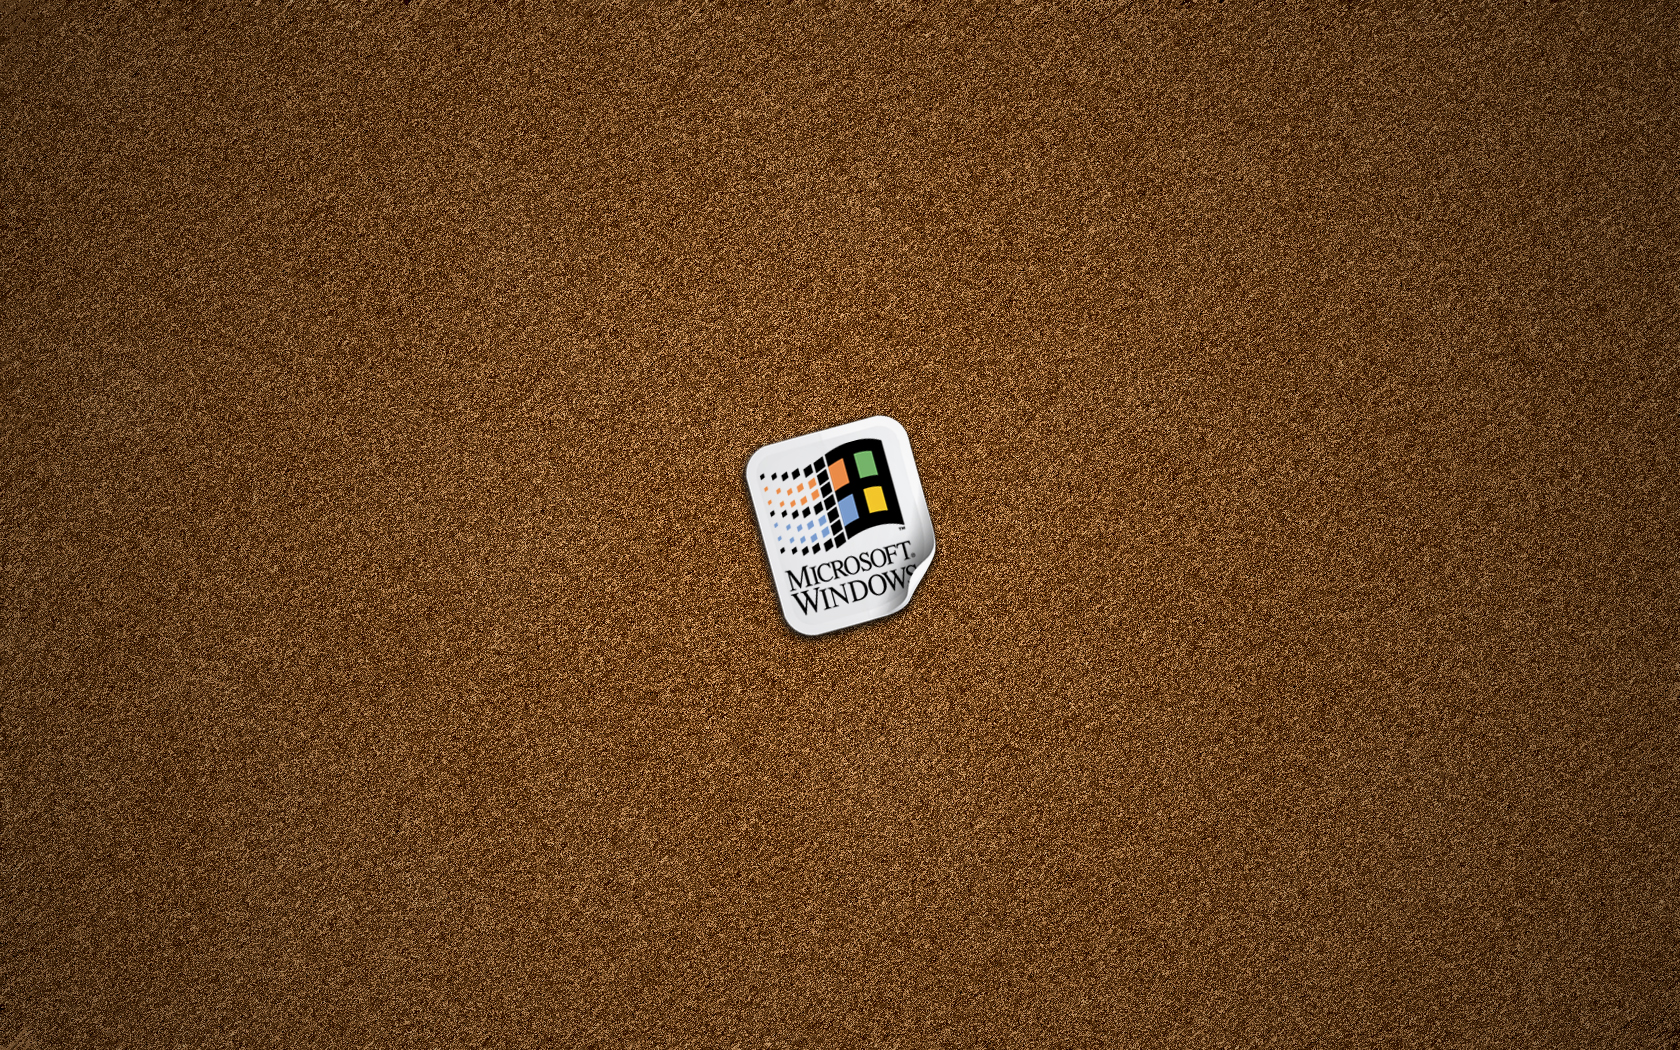 Windows Vista Wallpaper Set 13